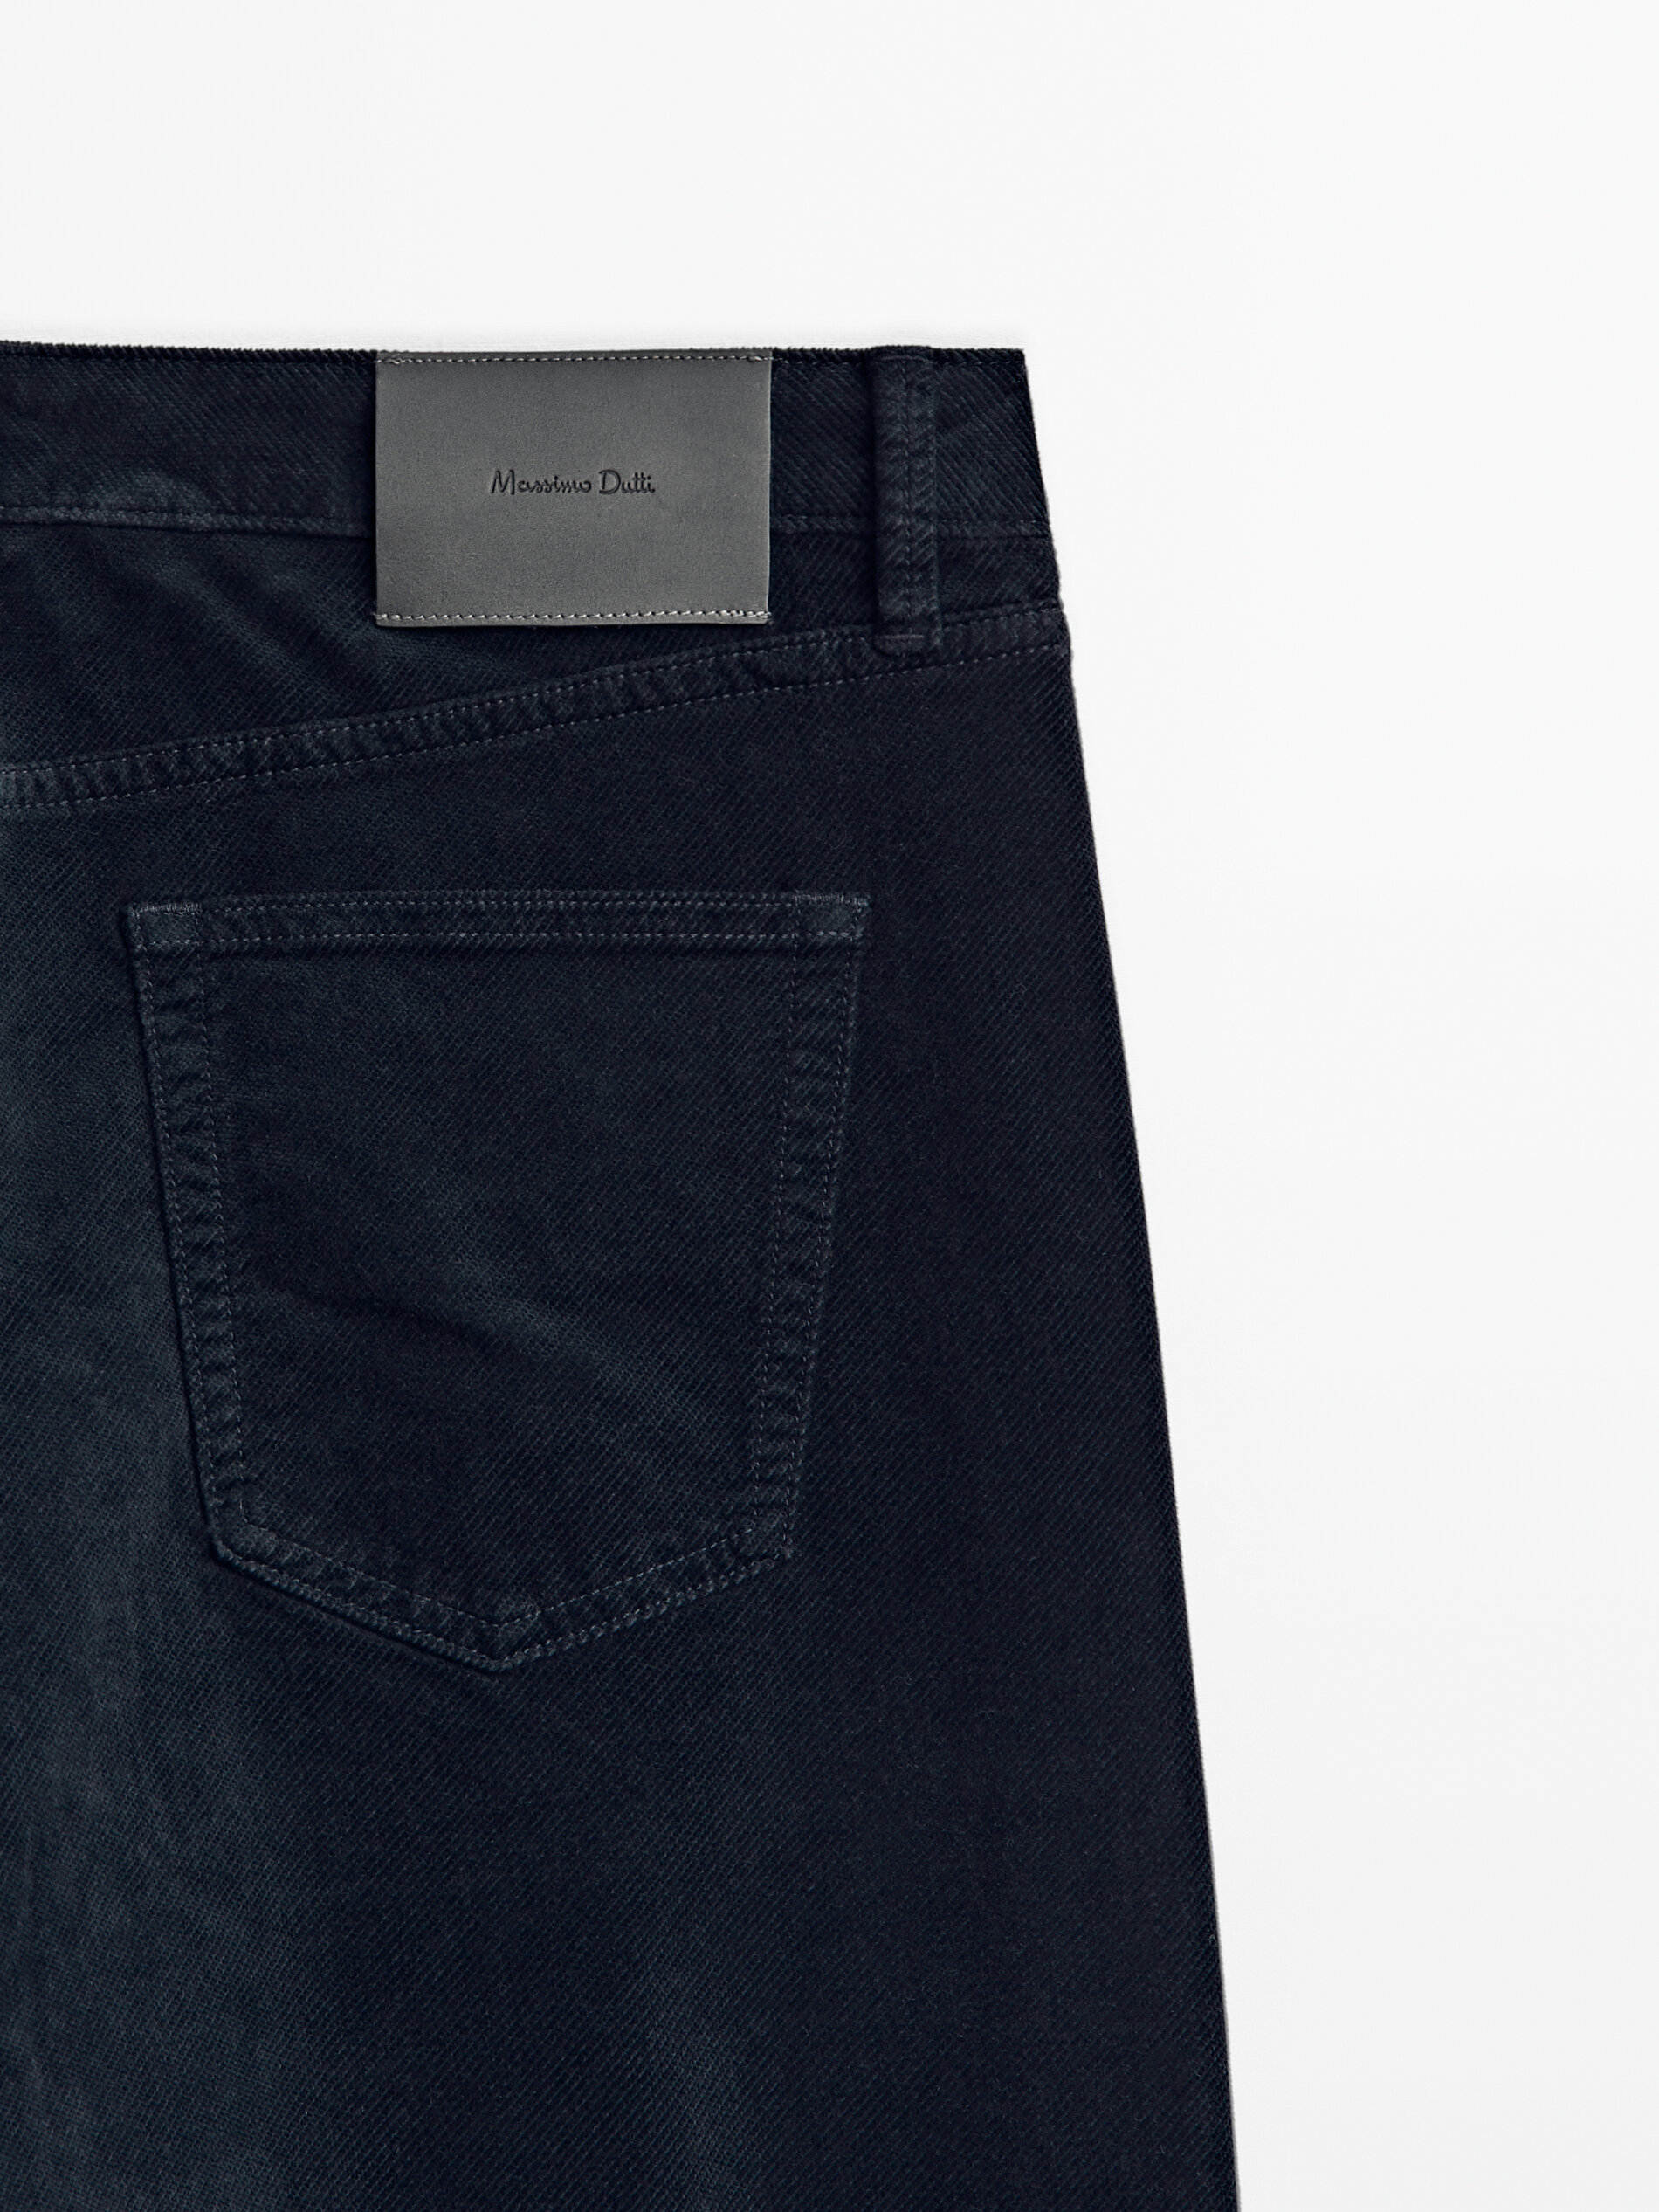 Darted 100% linen trousers with turn-up hem · Black, Khaki, Sand · Dressy | Massimo  Dutti